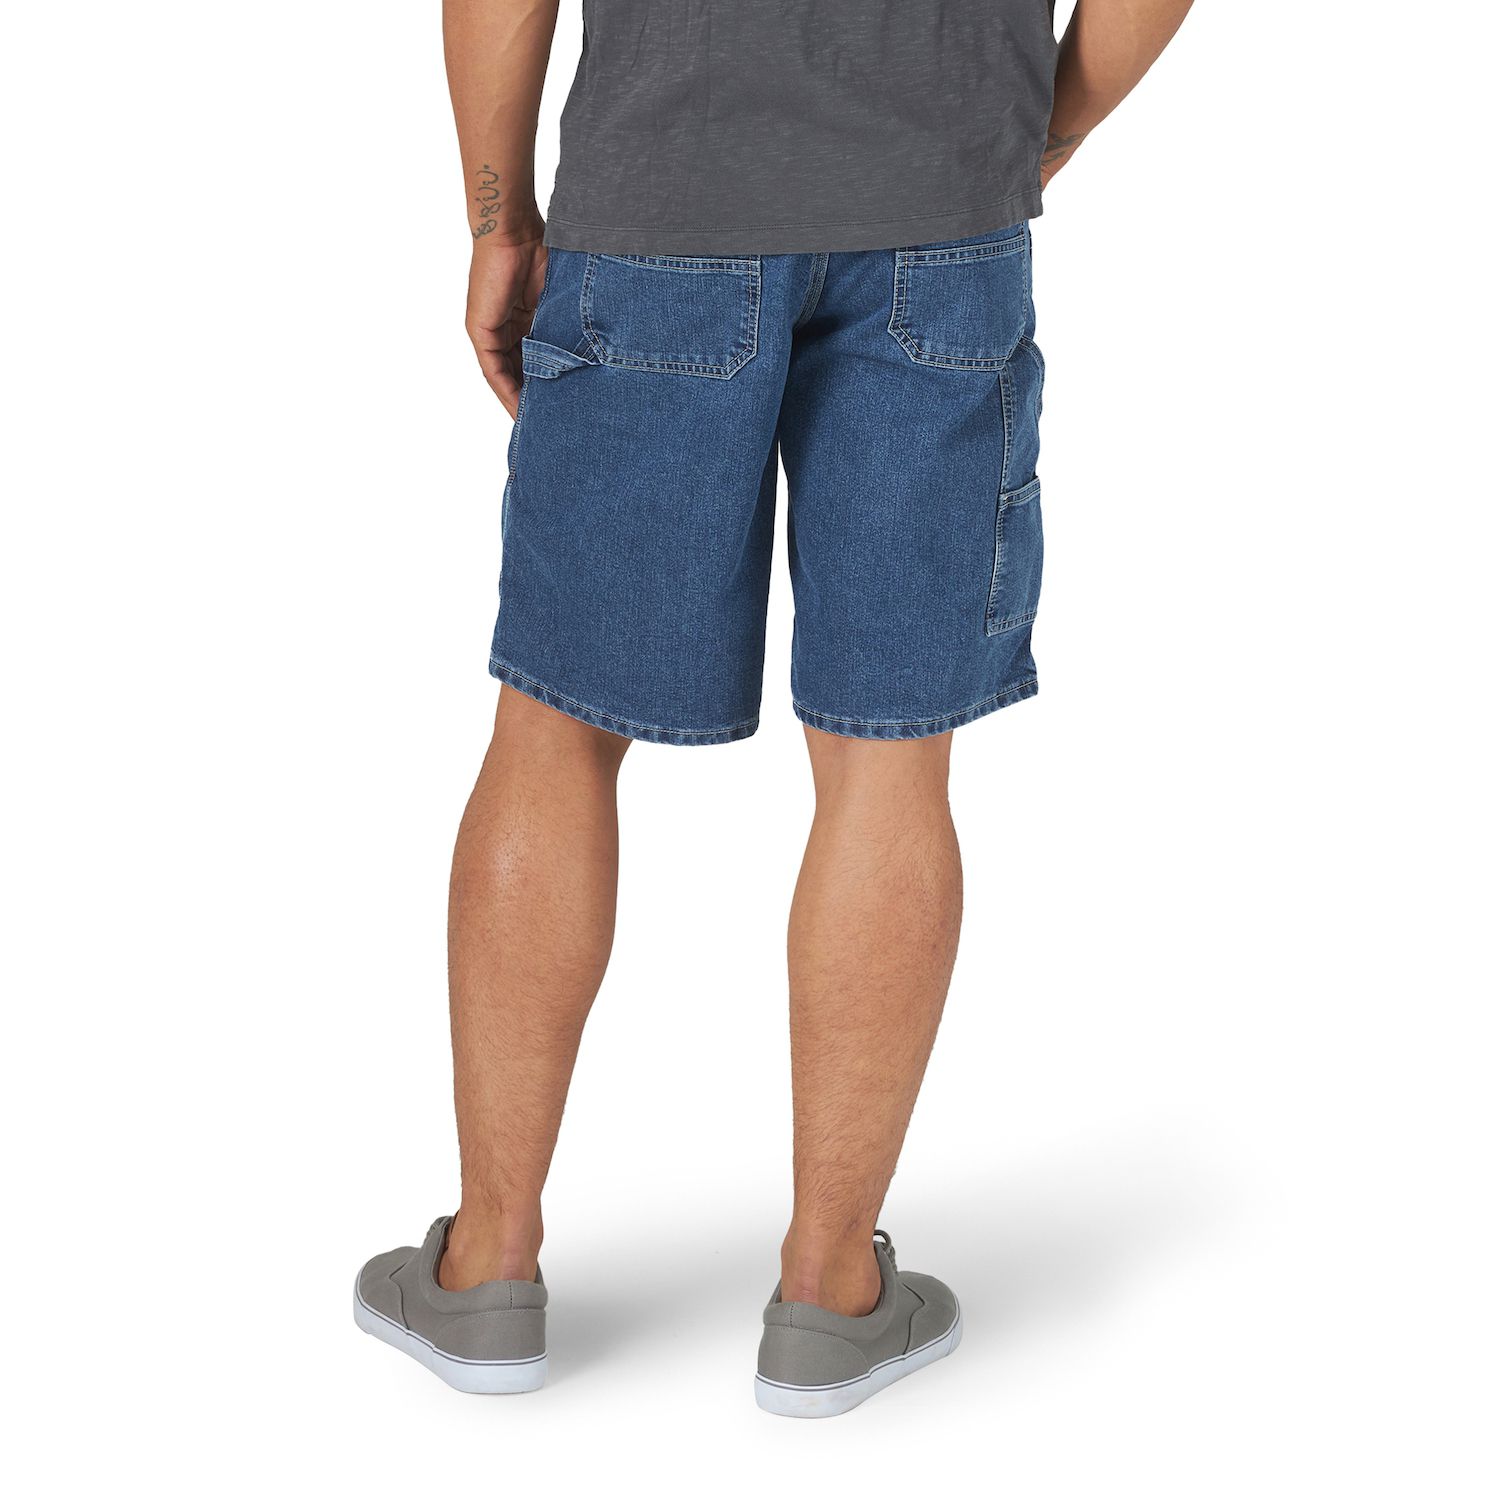 blue jean carpenter shorts